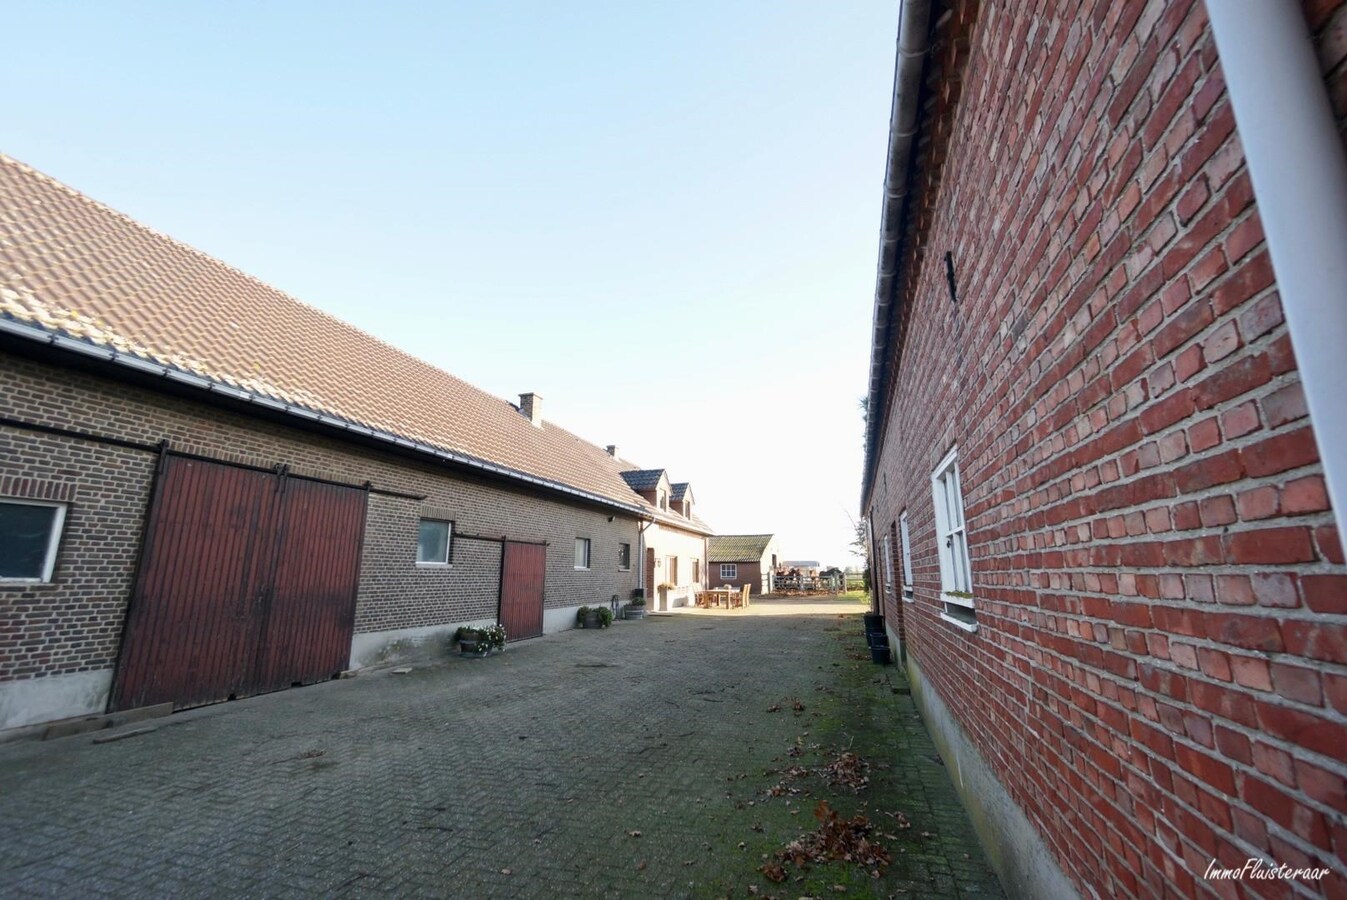 Property for sale in Bocholt